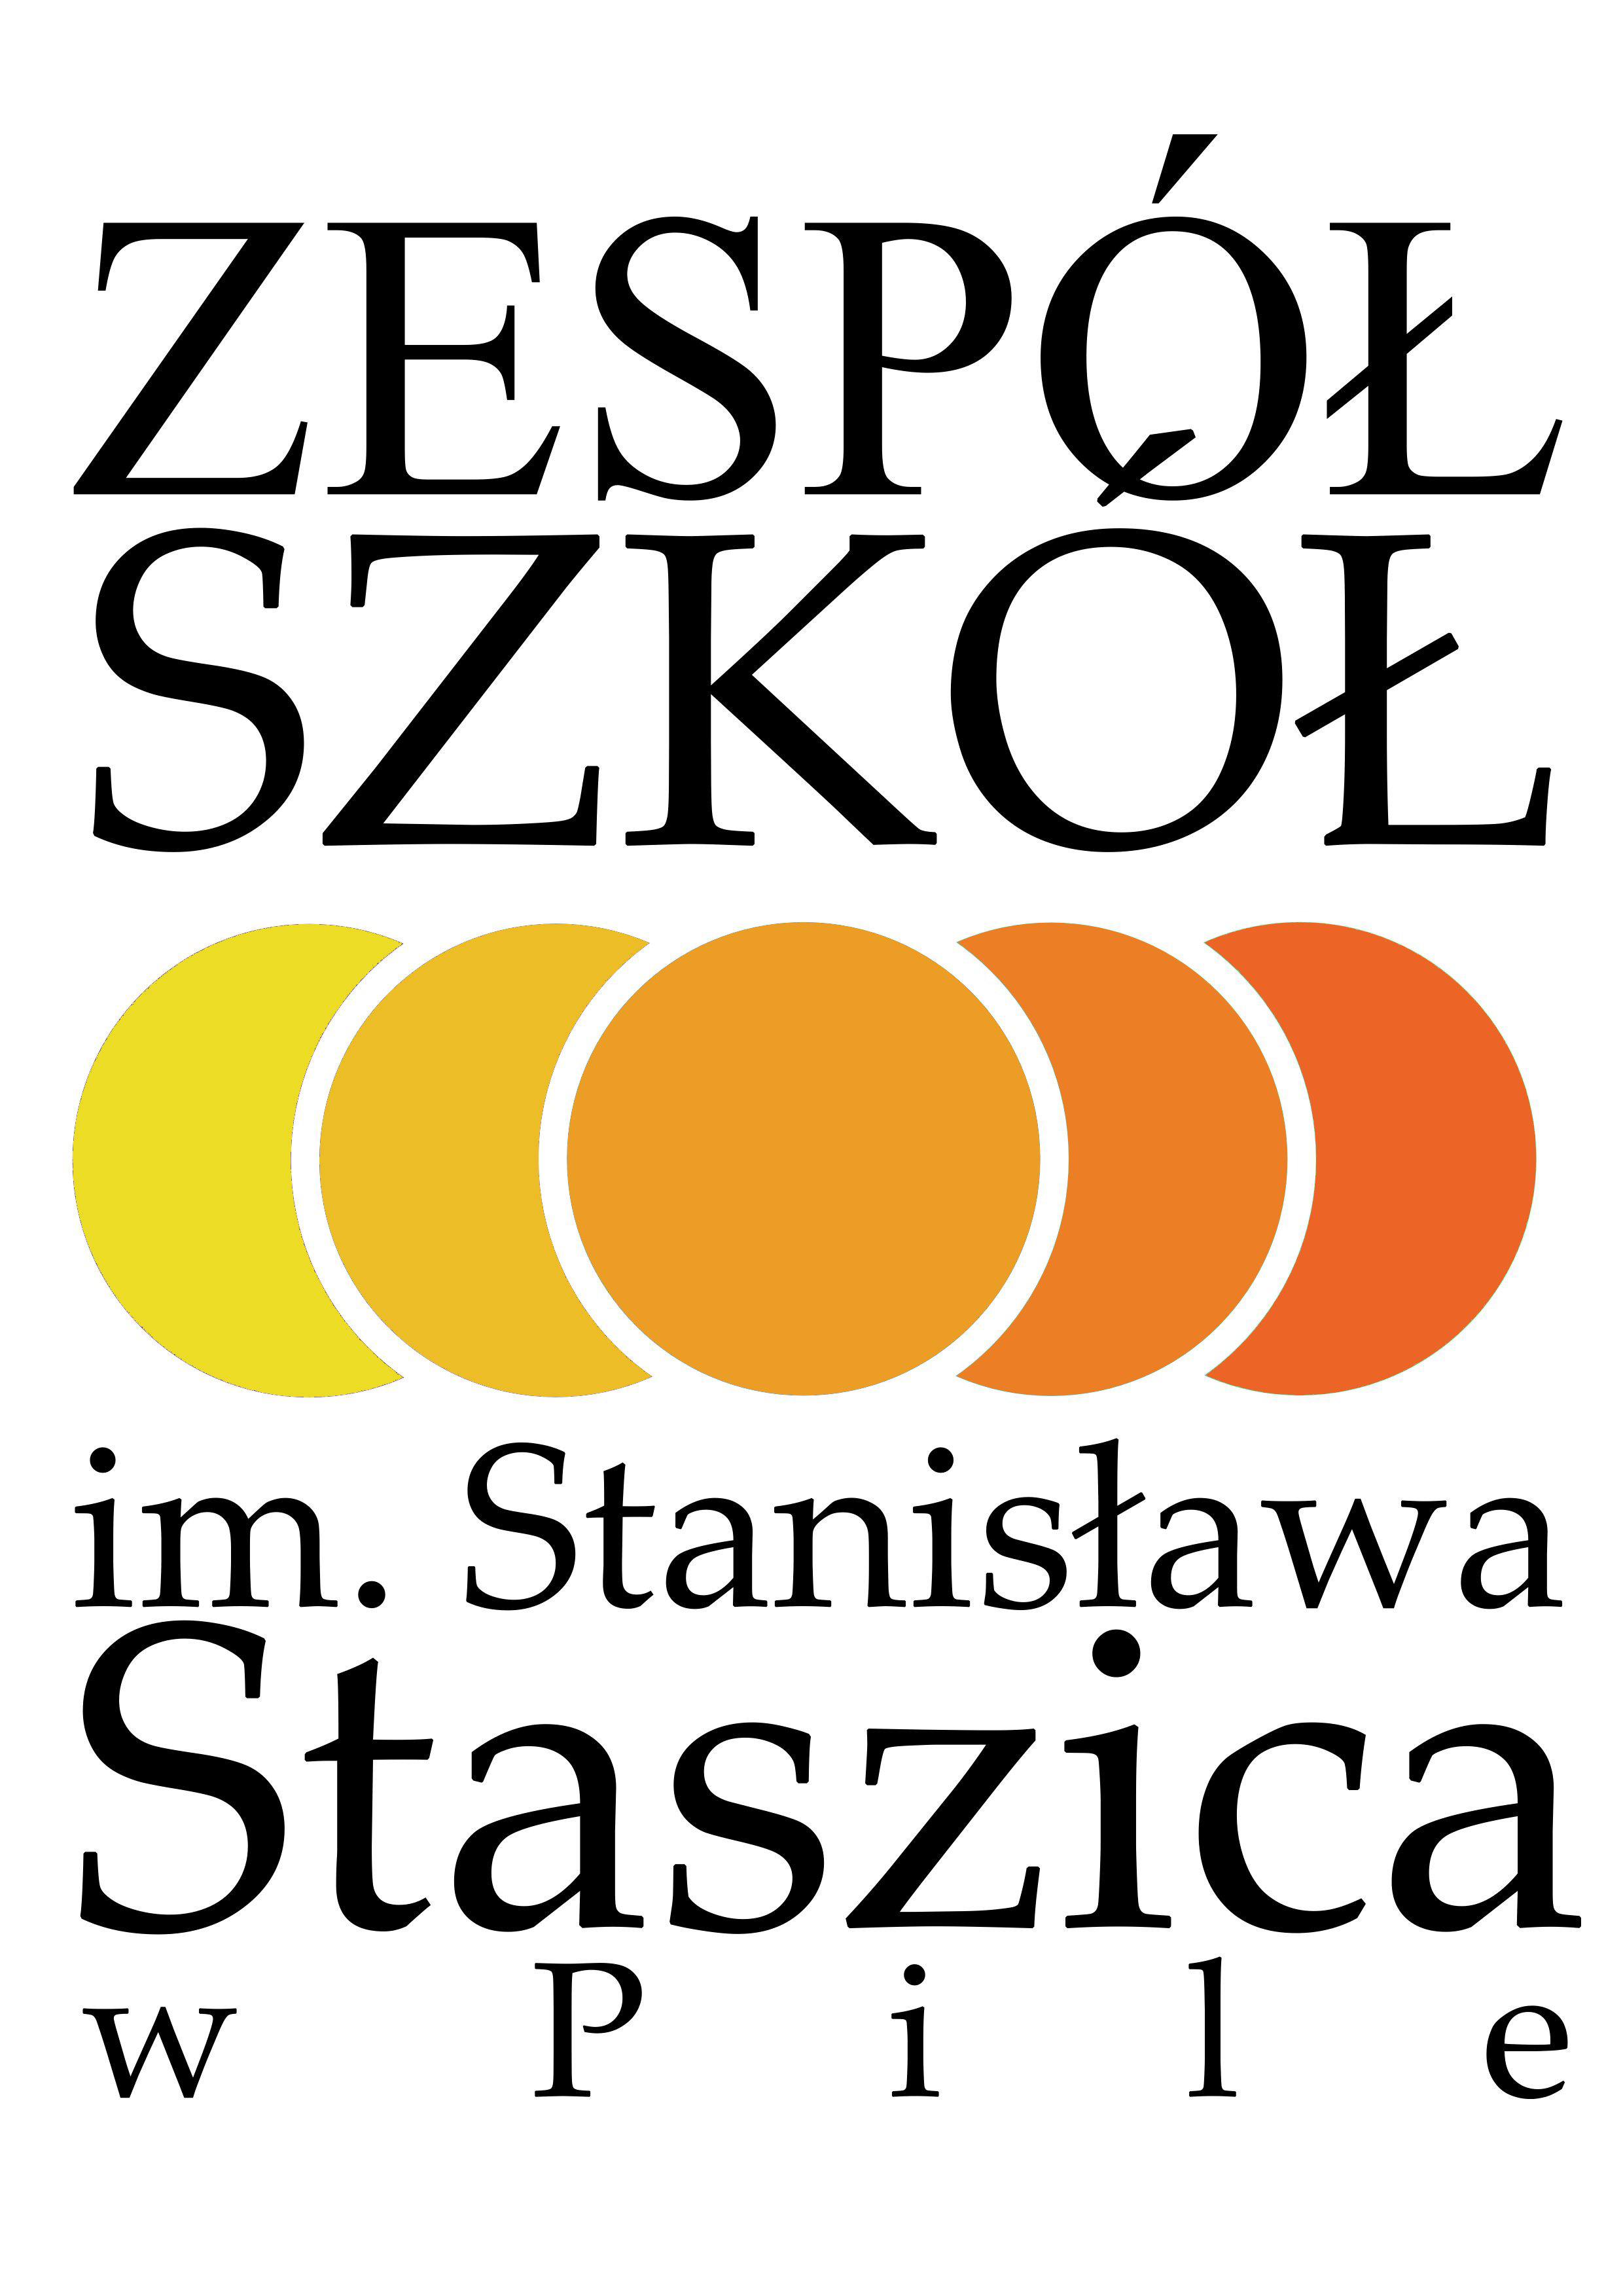 ZS Staszica